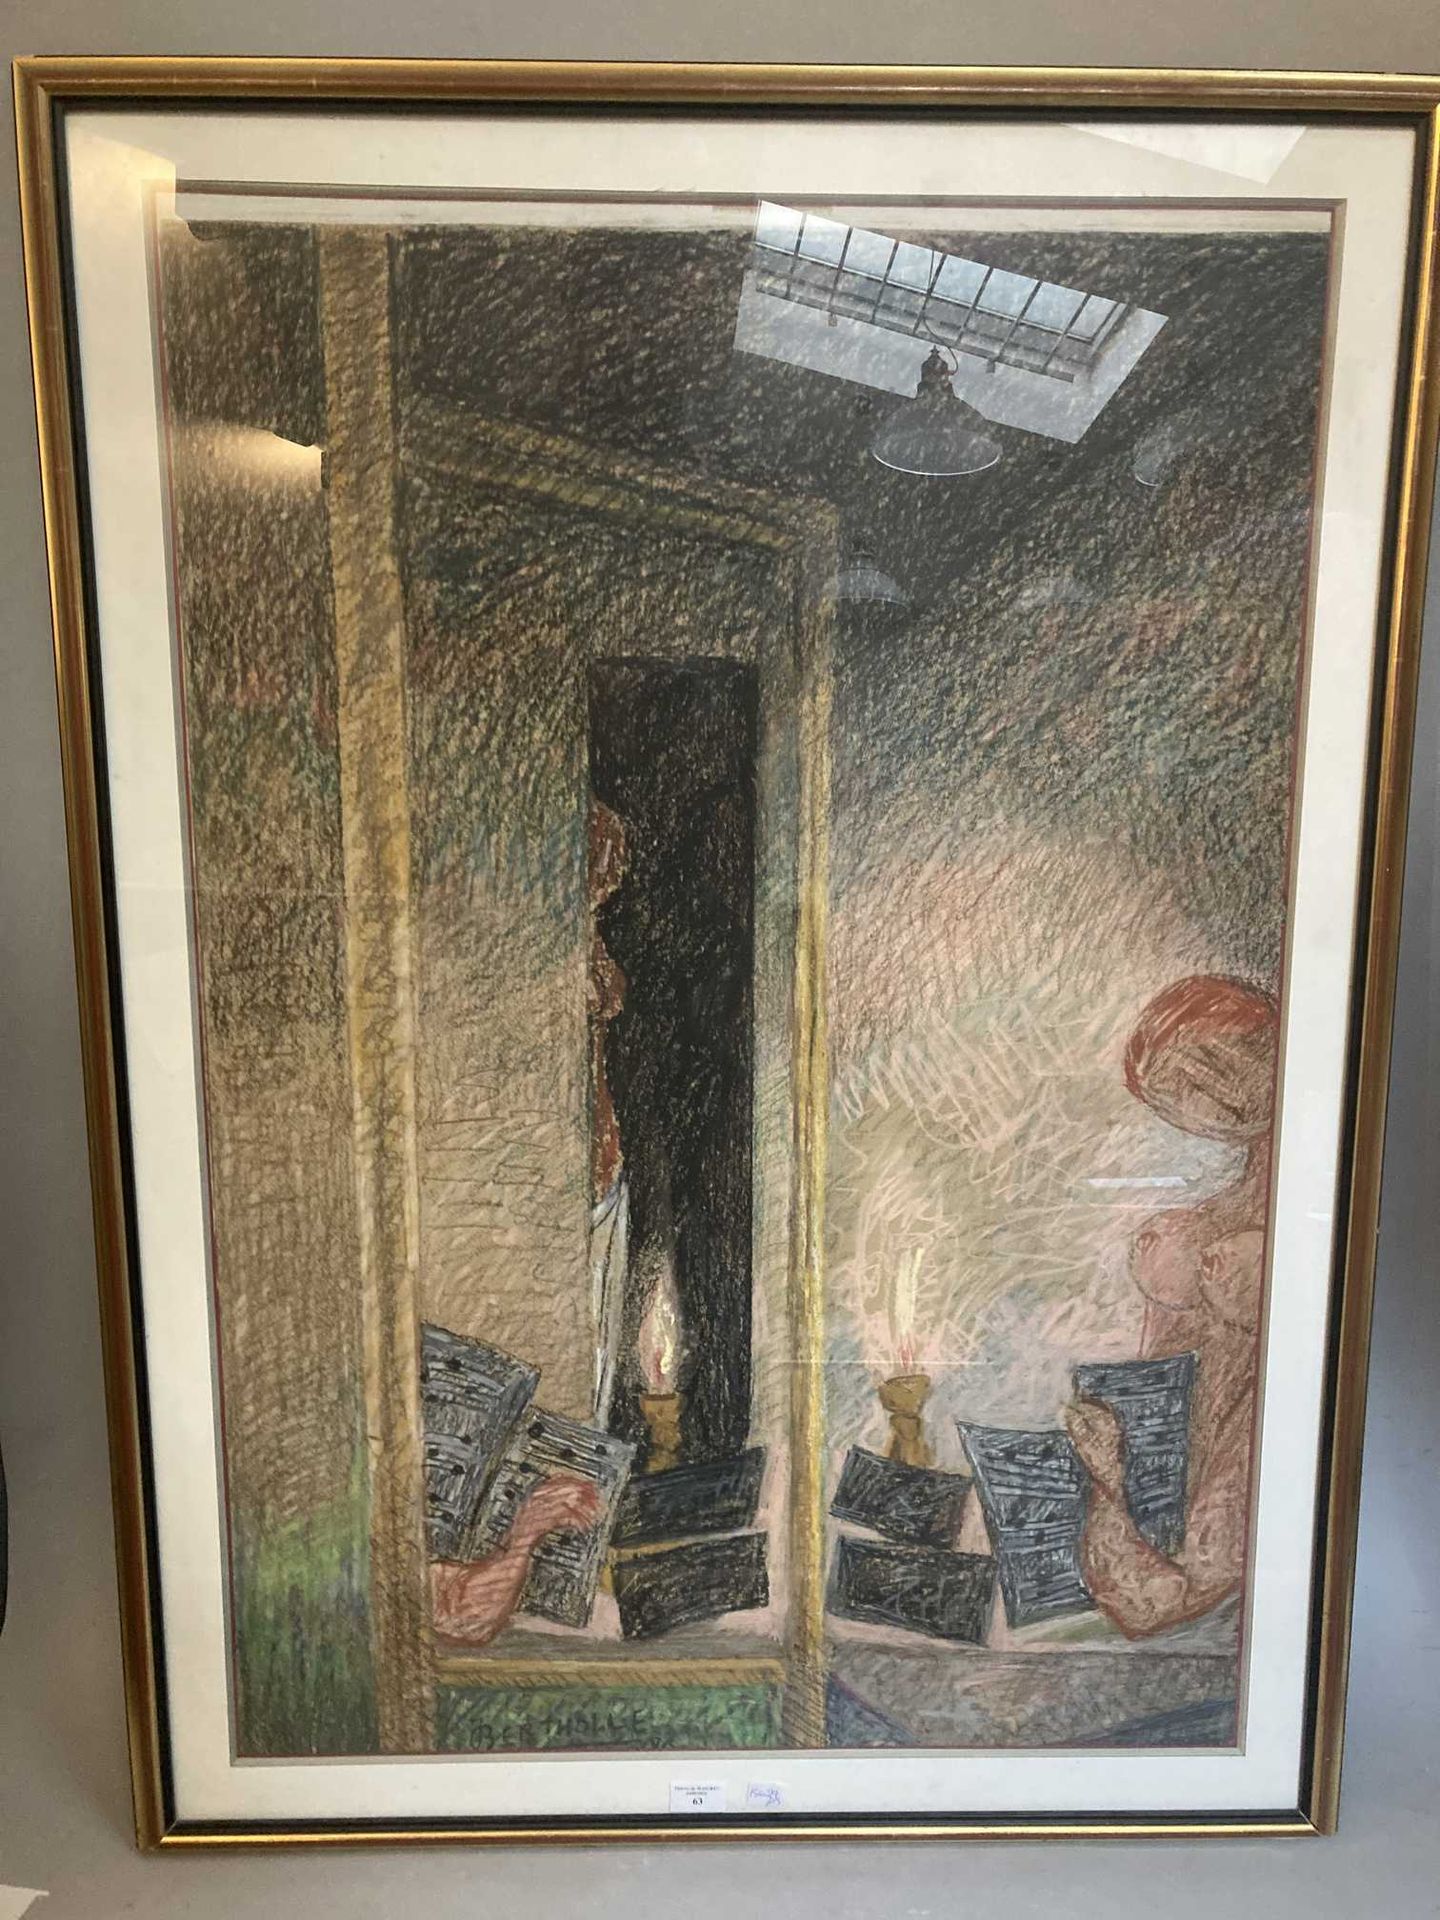 Null BERTHOLLE.

镜子，室内场景

题为《镜子》的粉彩画，有签名和日期为86年？ 

101 x 69.5